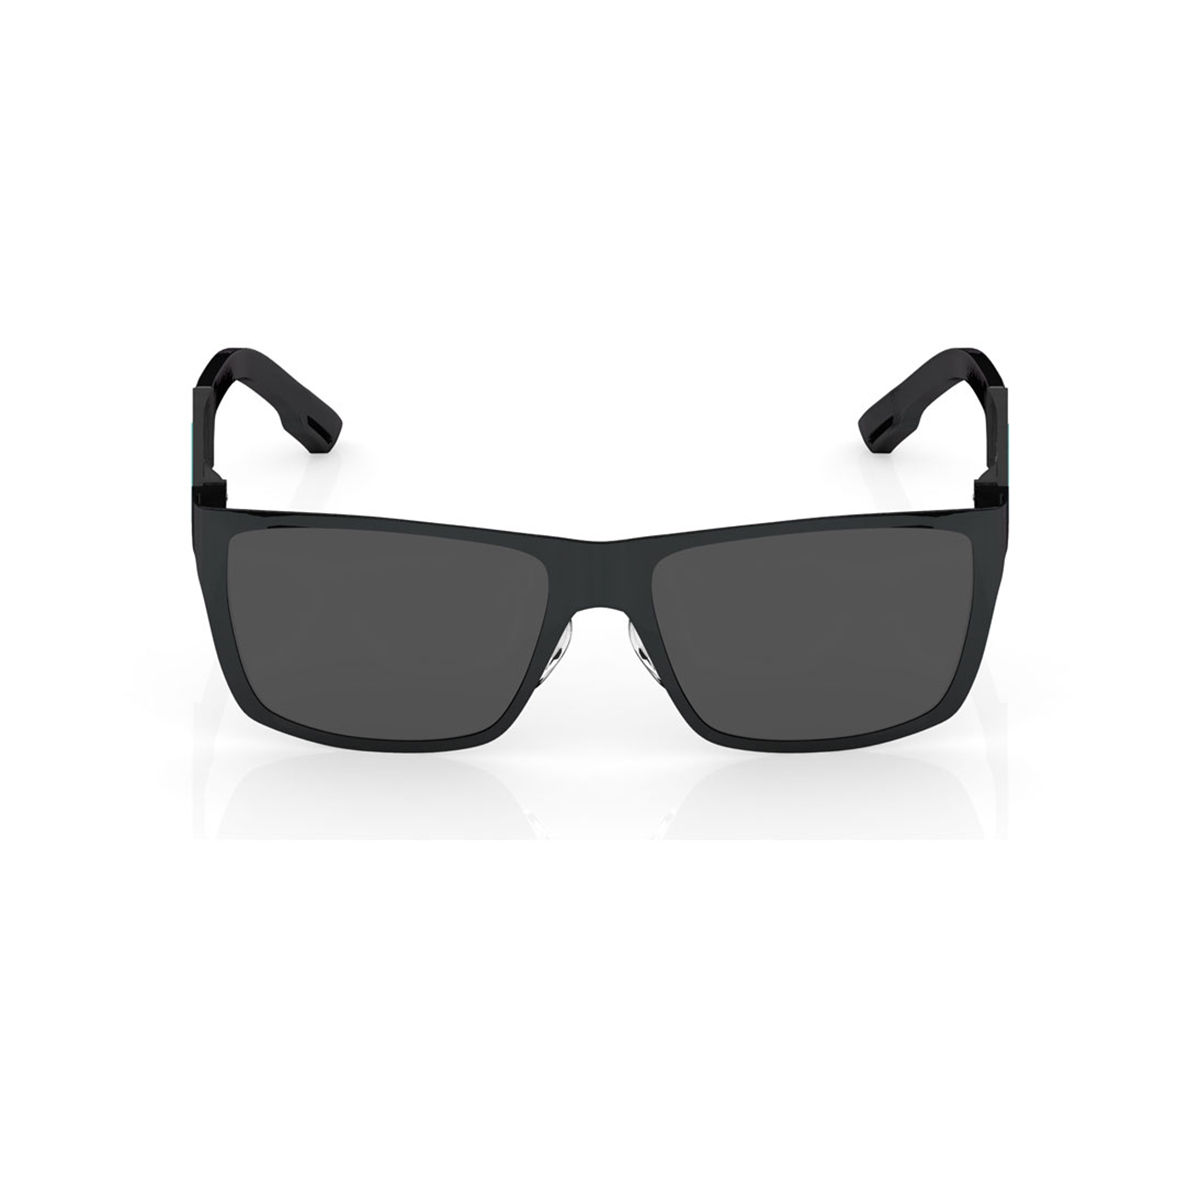 Fastrack Sunglasses : Buy Fastrack Black Square Sunglasses for Men Online |  Nykaa Fashion